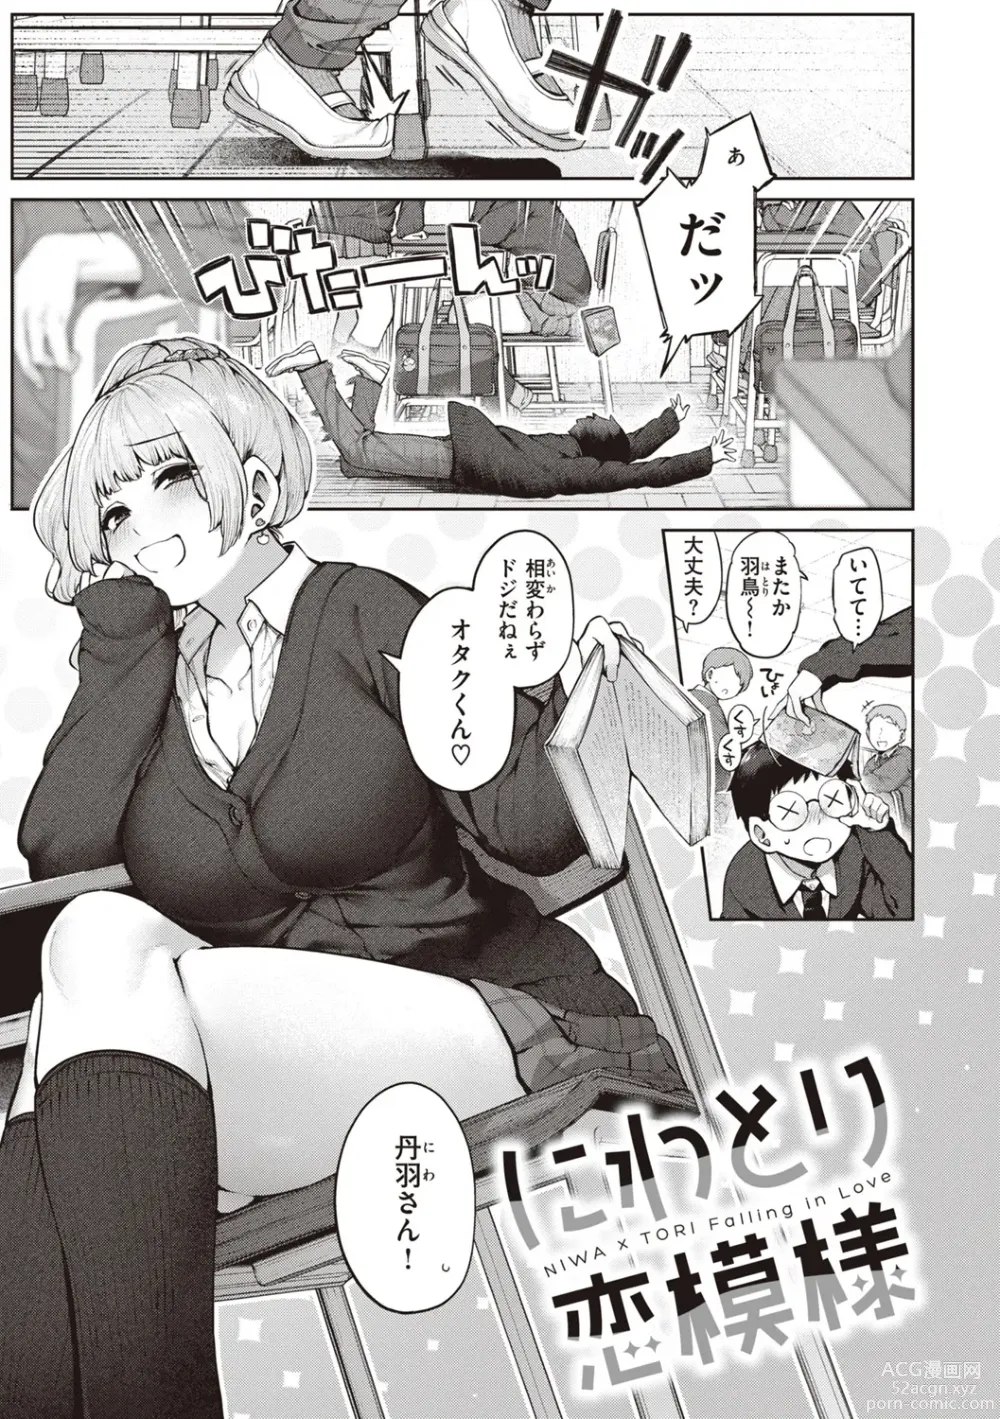 Page 5 of manga DA-DA-MO-RE